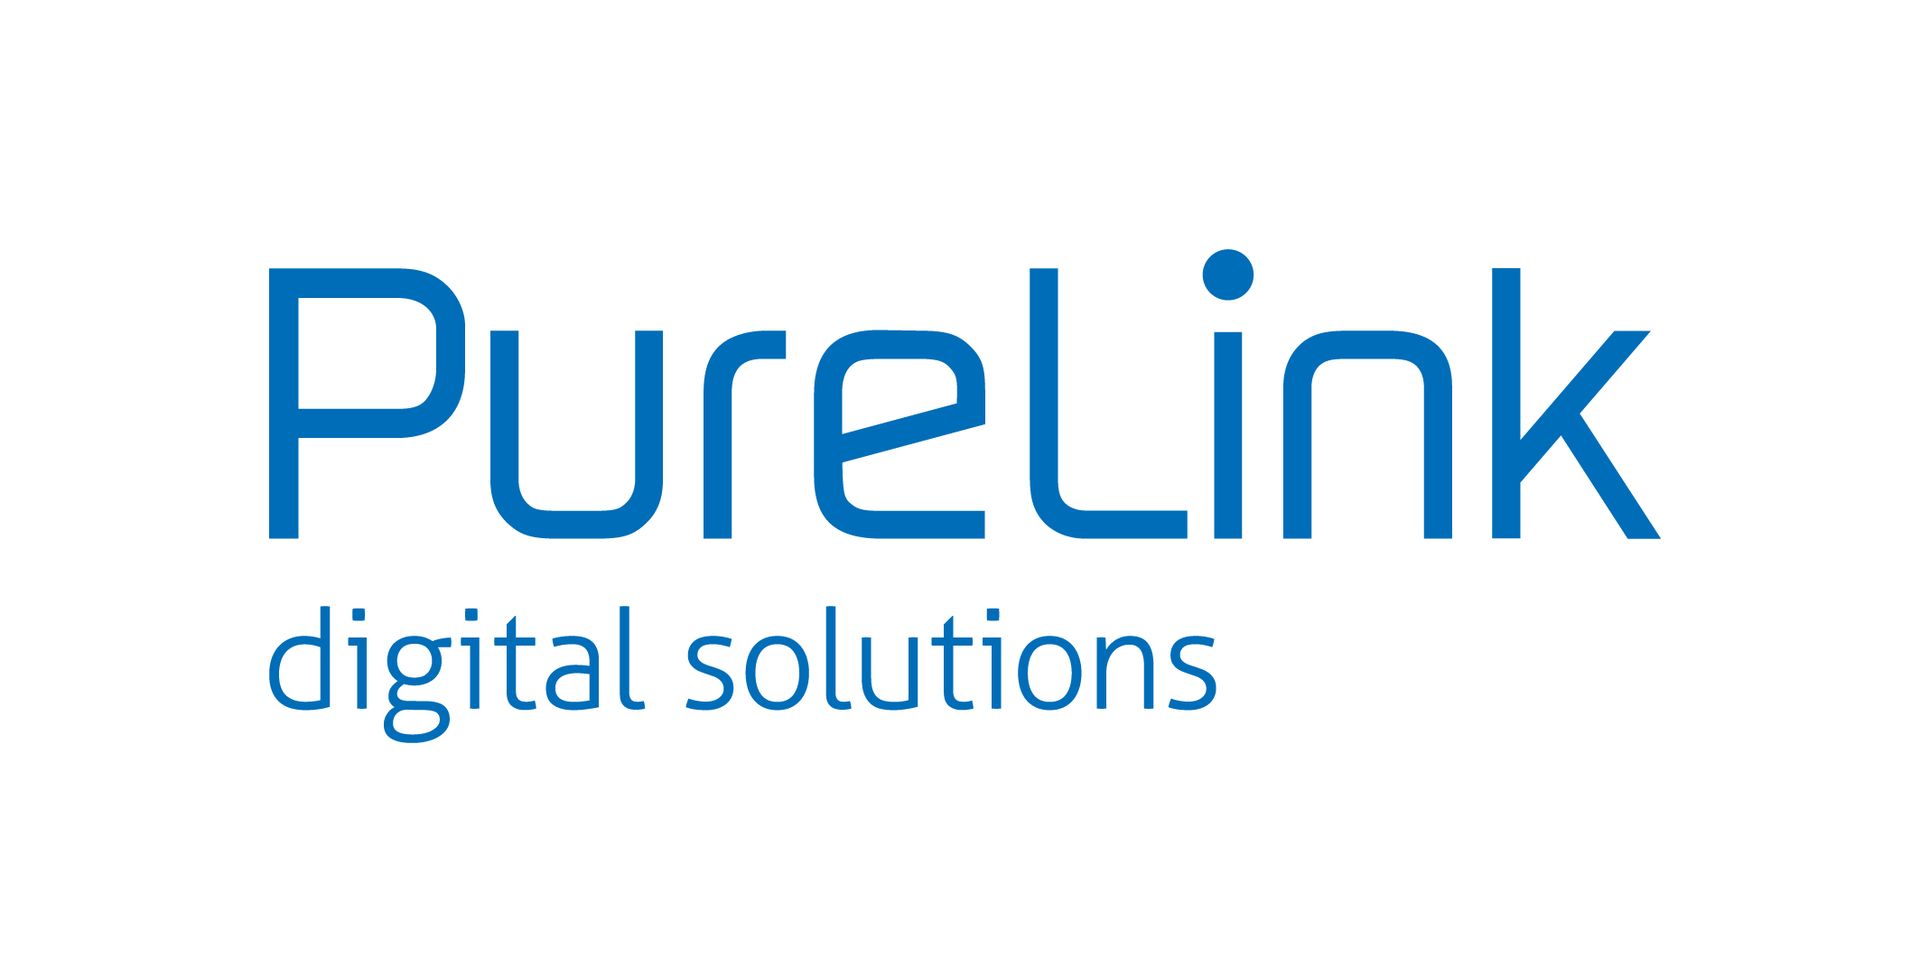 Brand: Purelink